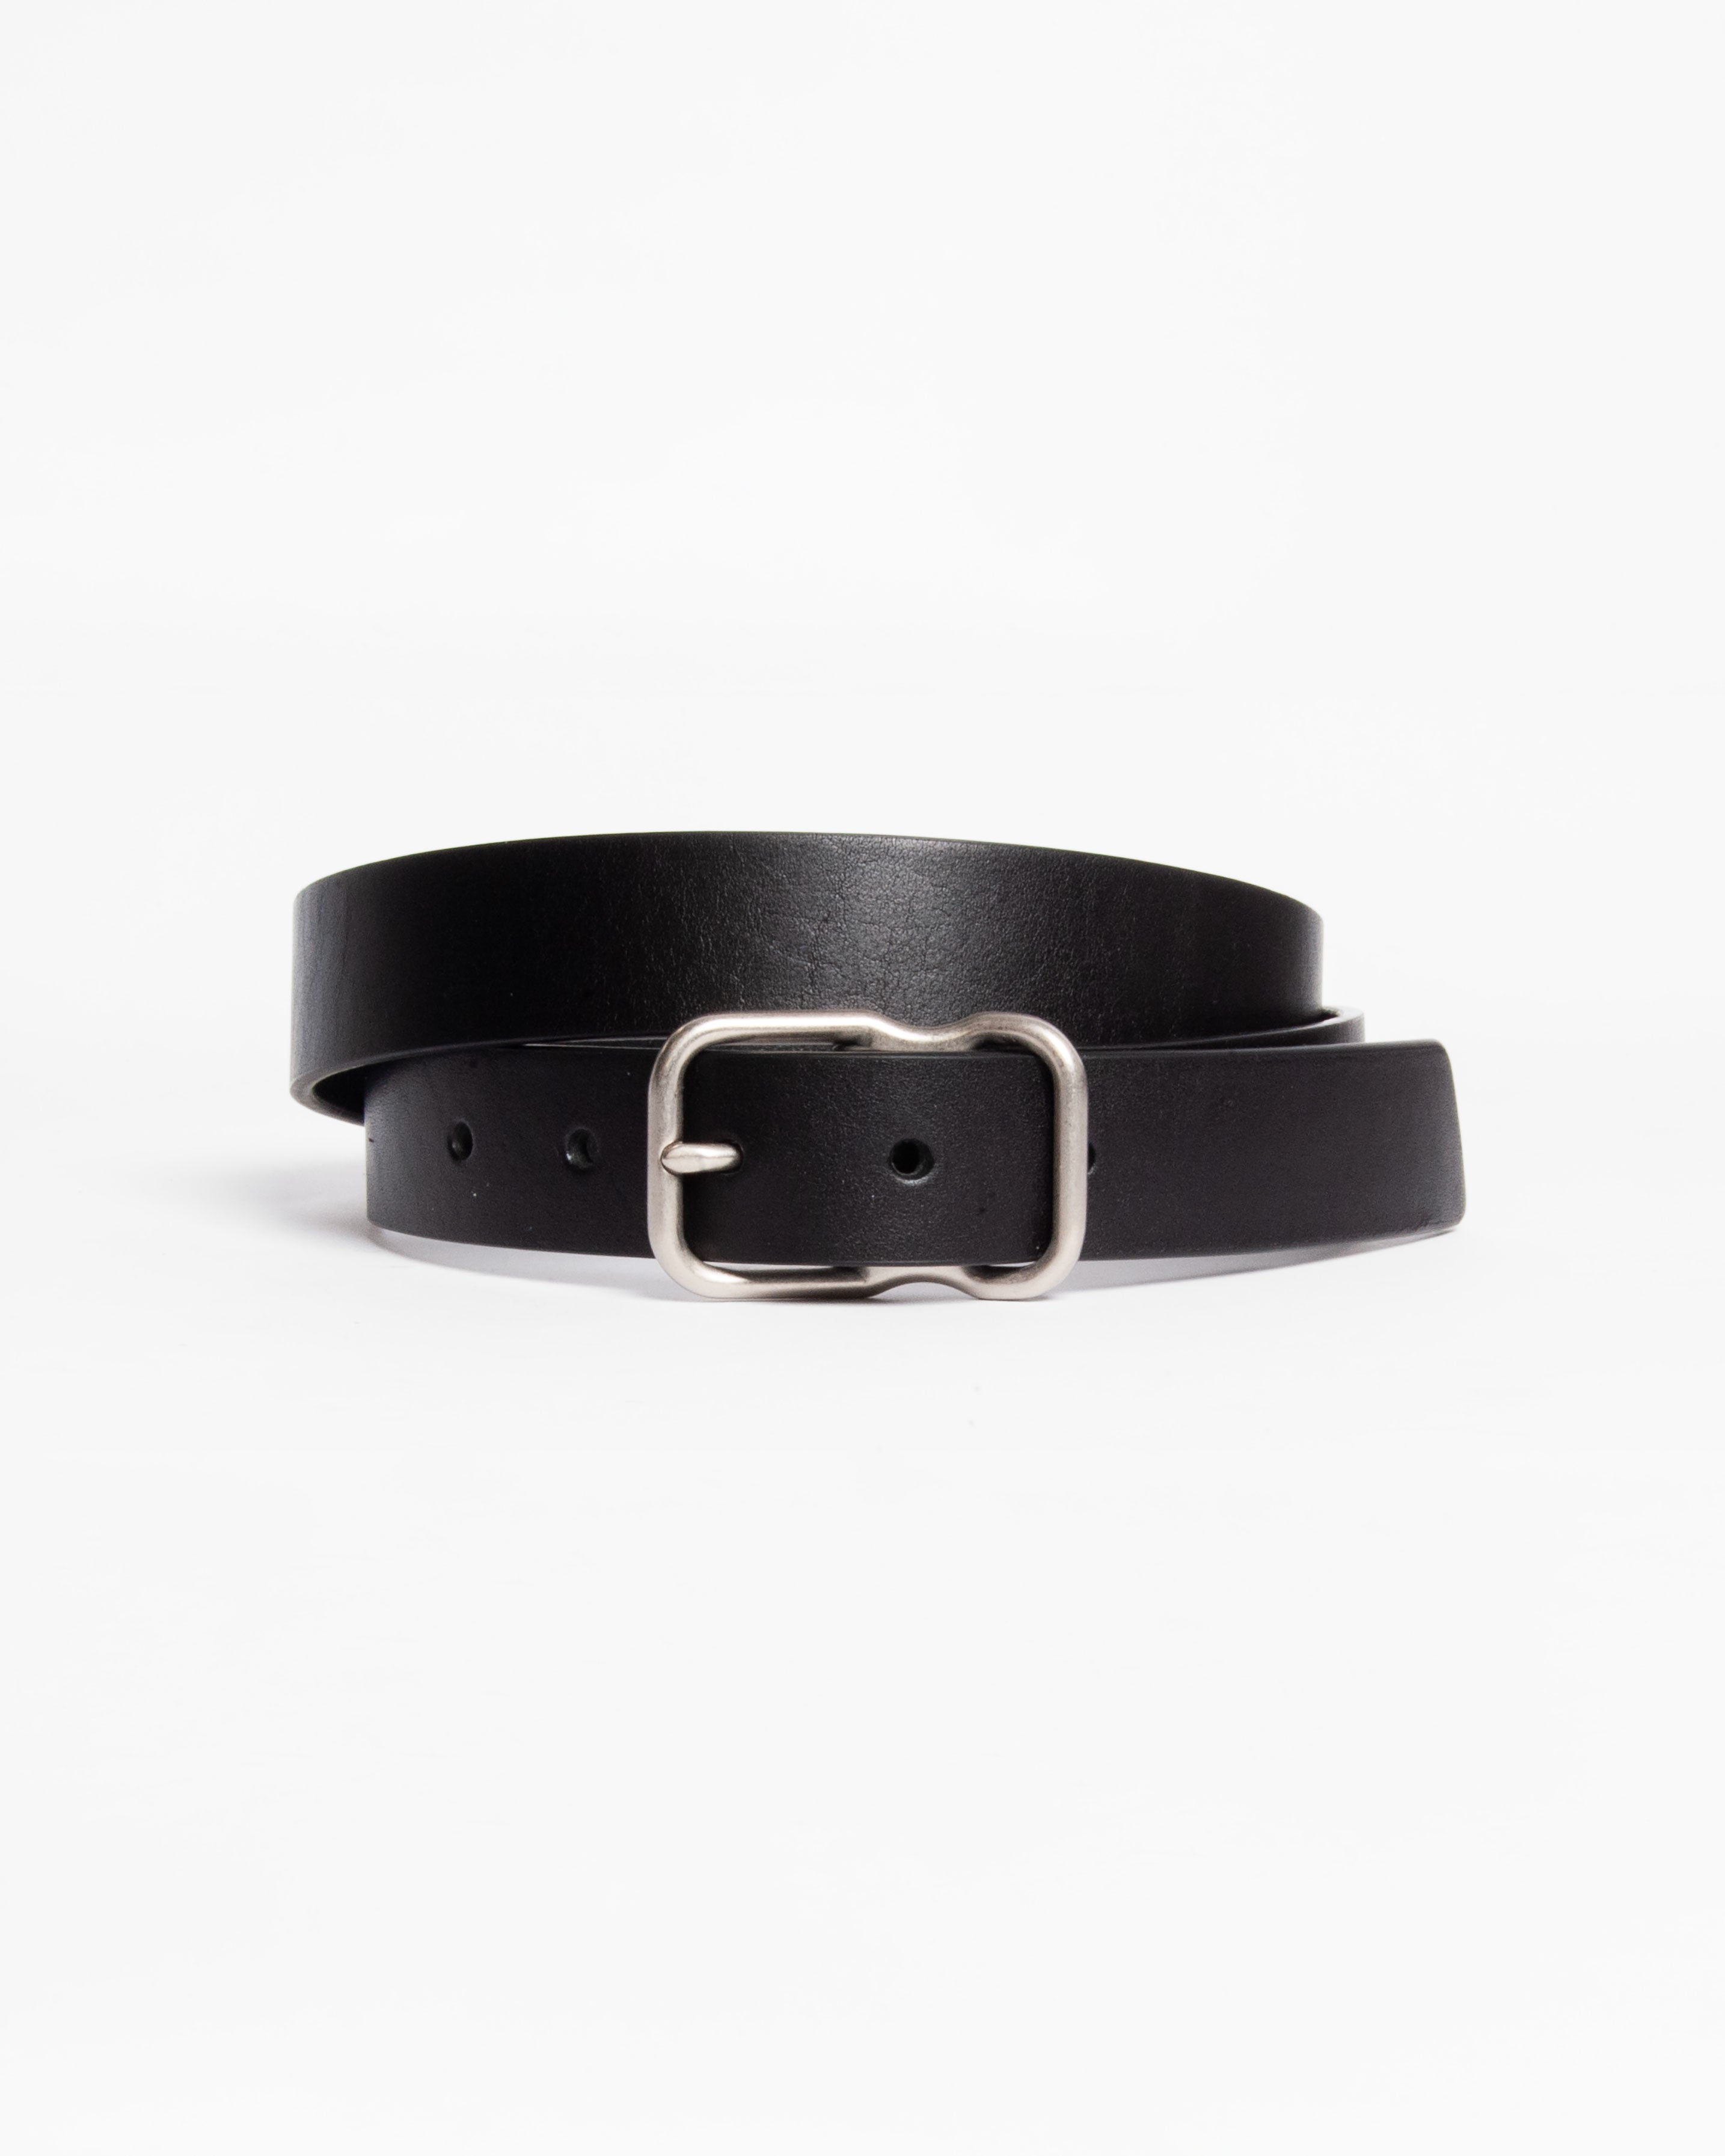 118 Signature Leather Belt - Narrow - Black - Nickel